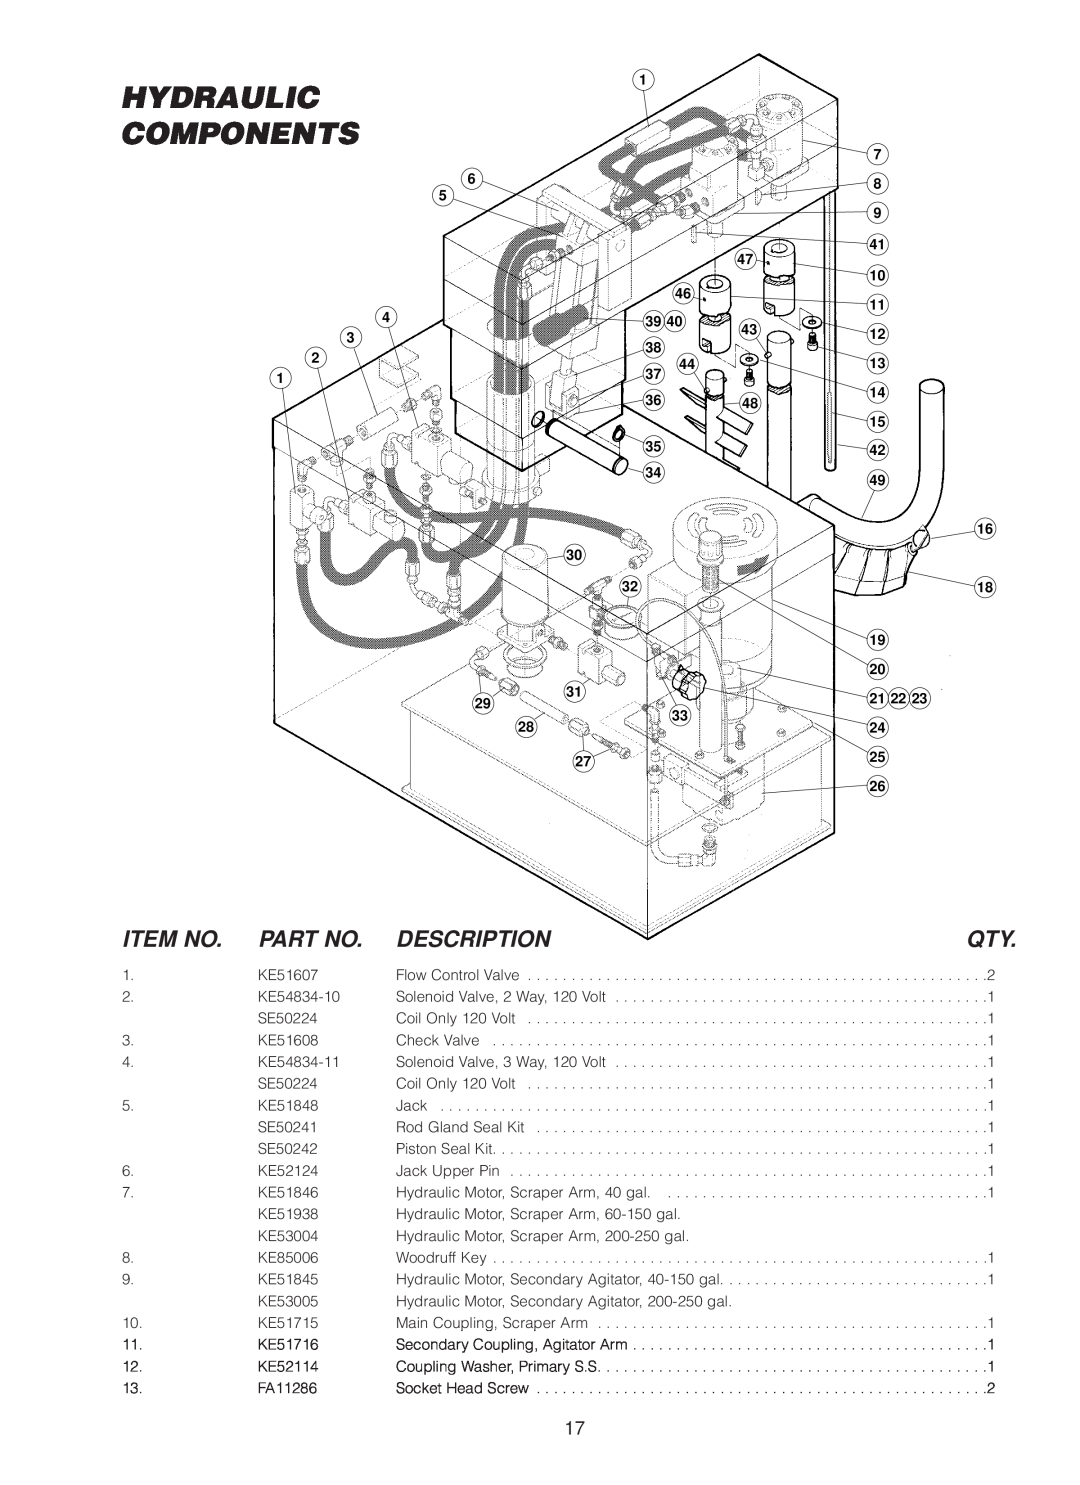 Cleveland Range MKDL-40-CC, MKDL-125-CC, MKDL-80-CC manual Hydraulic Components, Item No, Description 